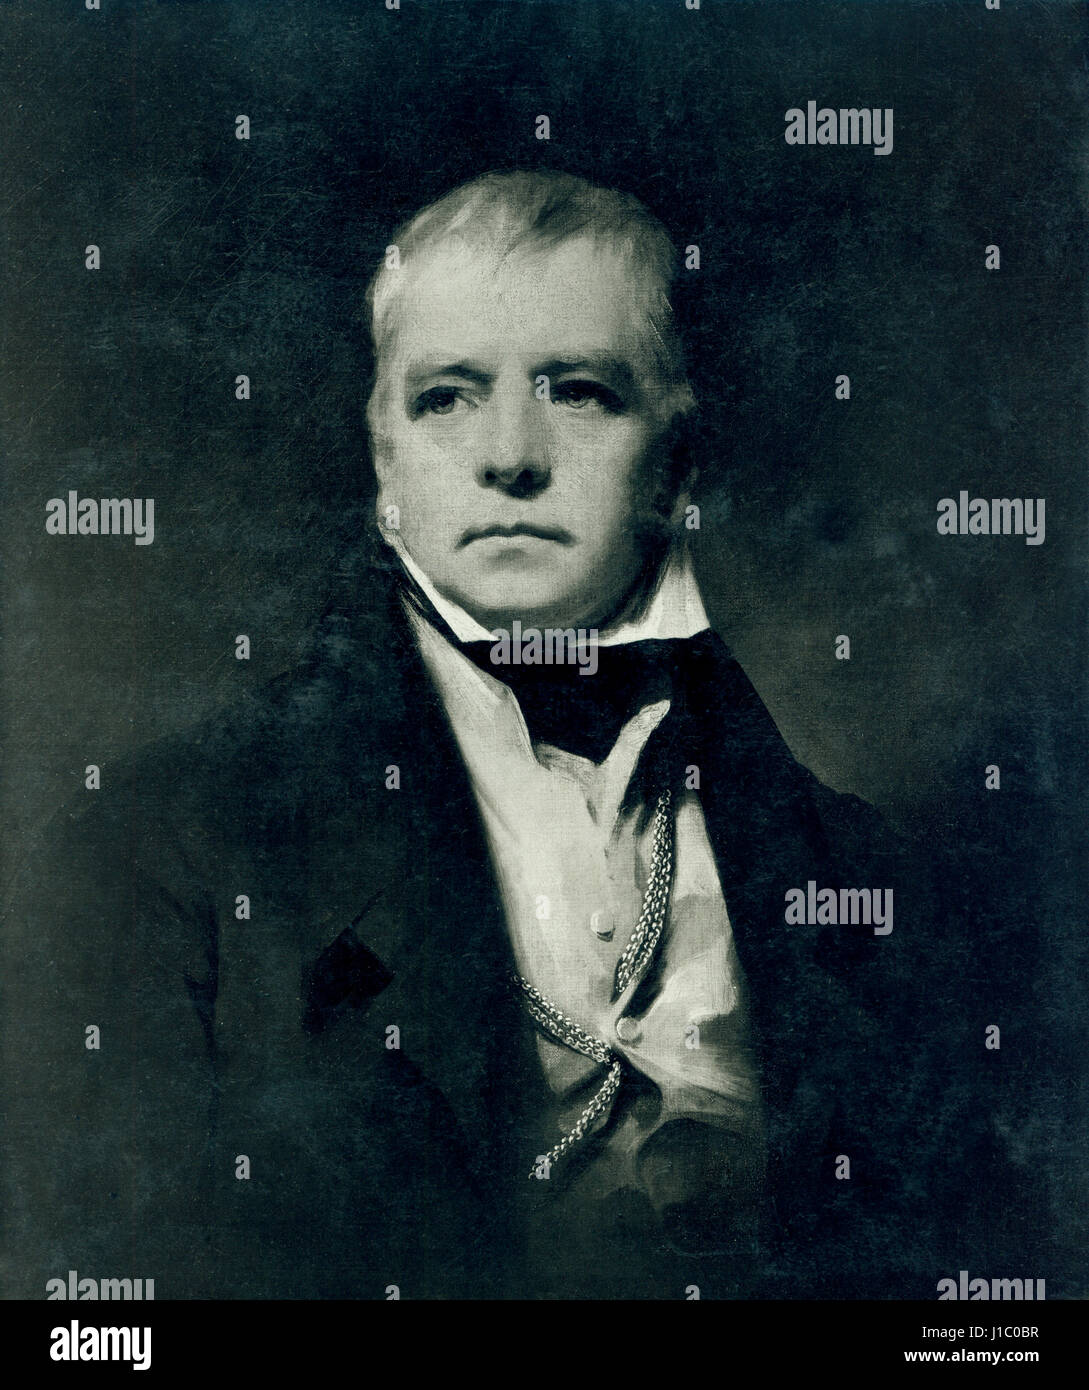 Sir Walter Scott (1771-1832), Scottish Historical Novelist, Playwright and Poet, Portrait, Painting by Sir Henry Raeburn, 1822 Stock Photo